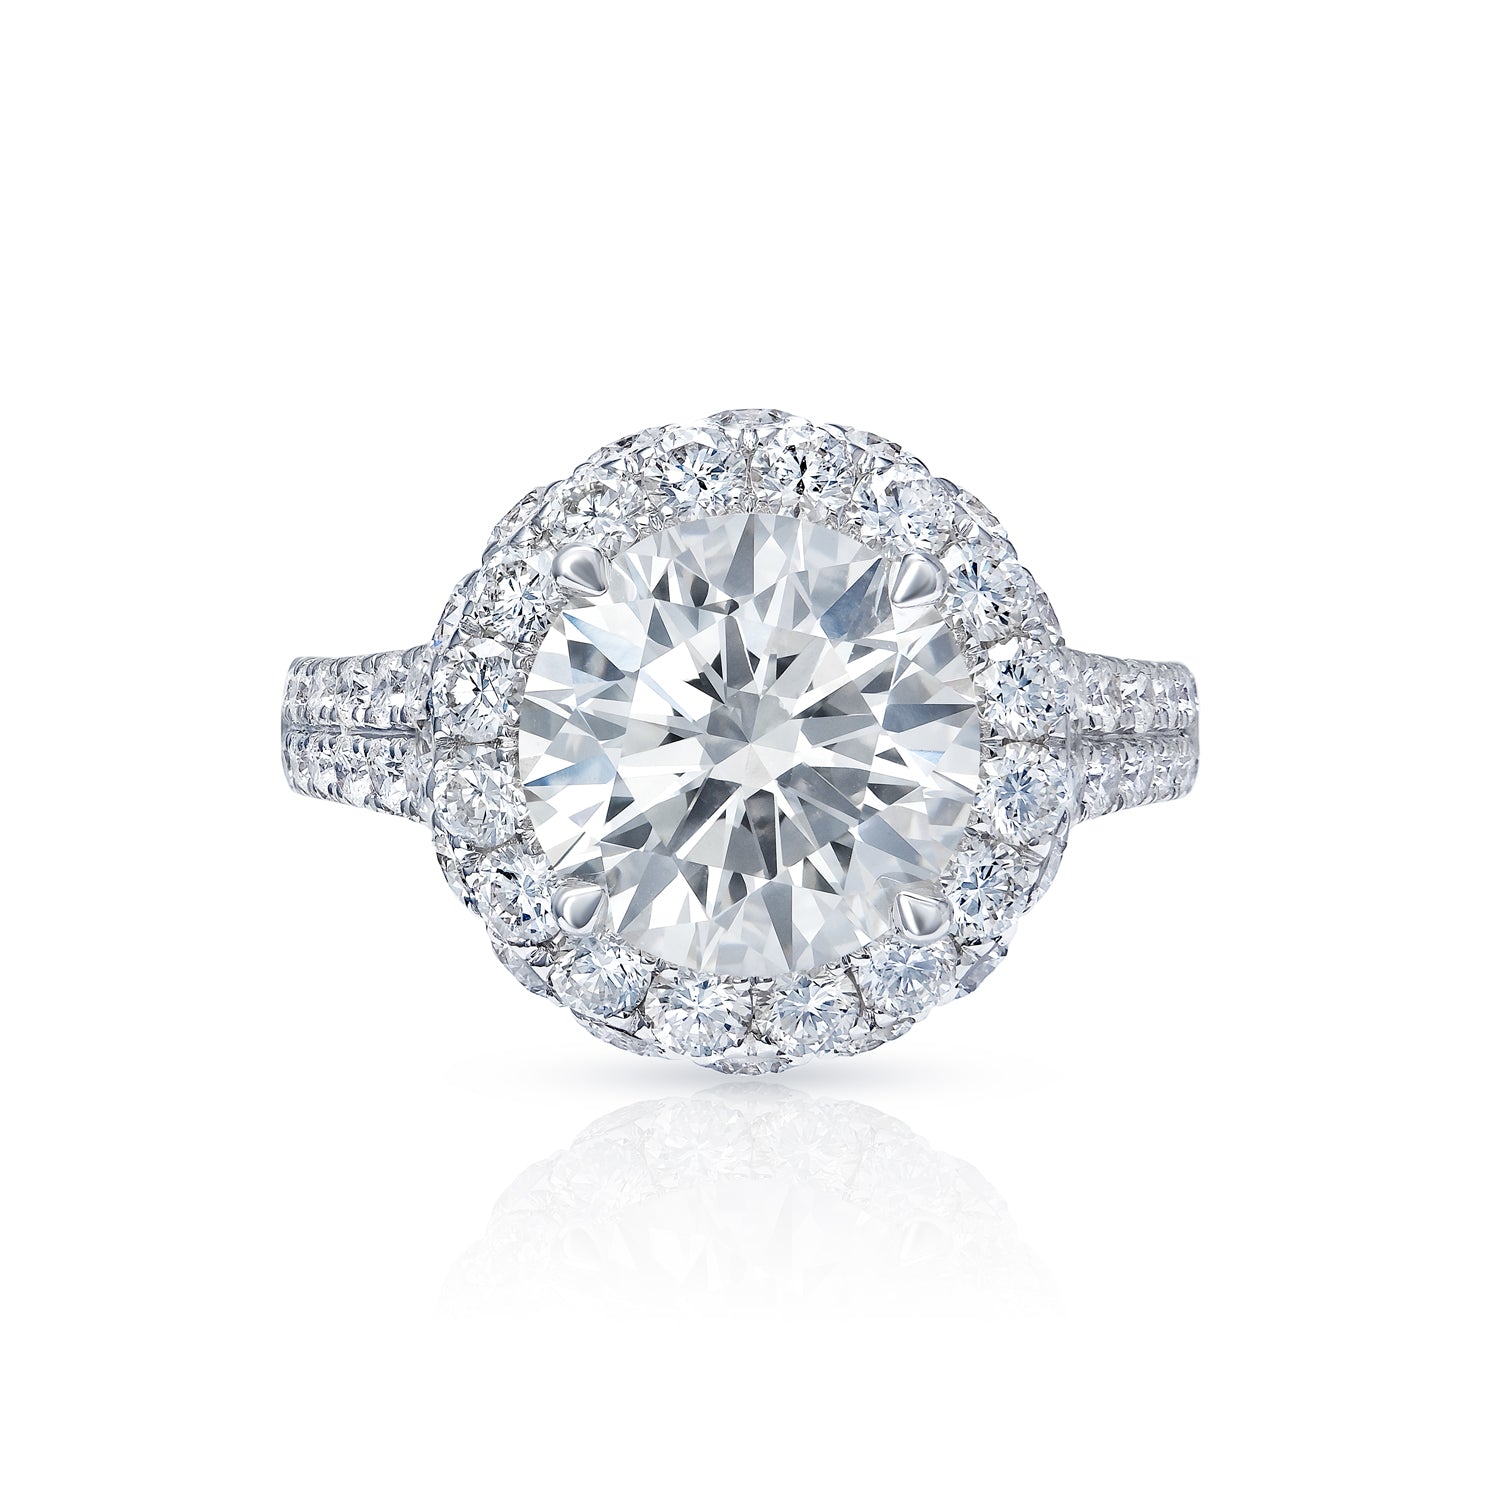 6 Carat Diamond Engagement Ring Guide | The Diamond Pro